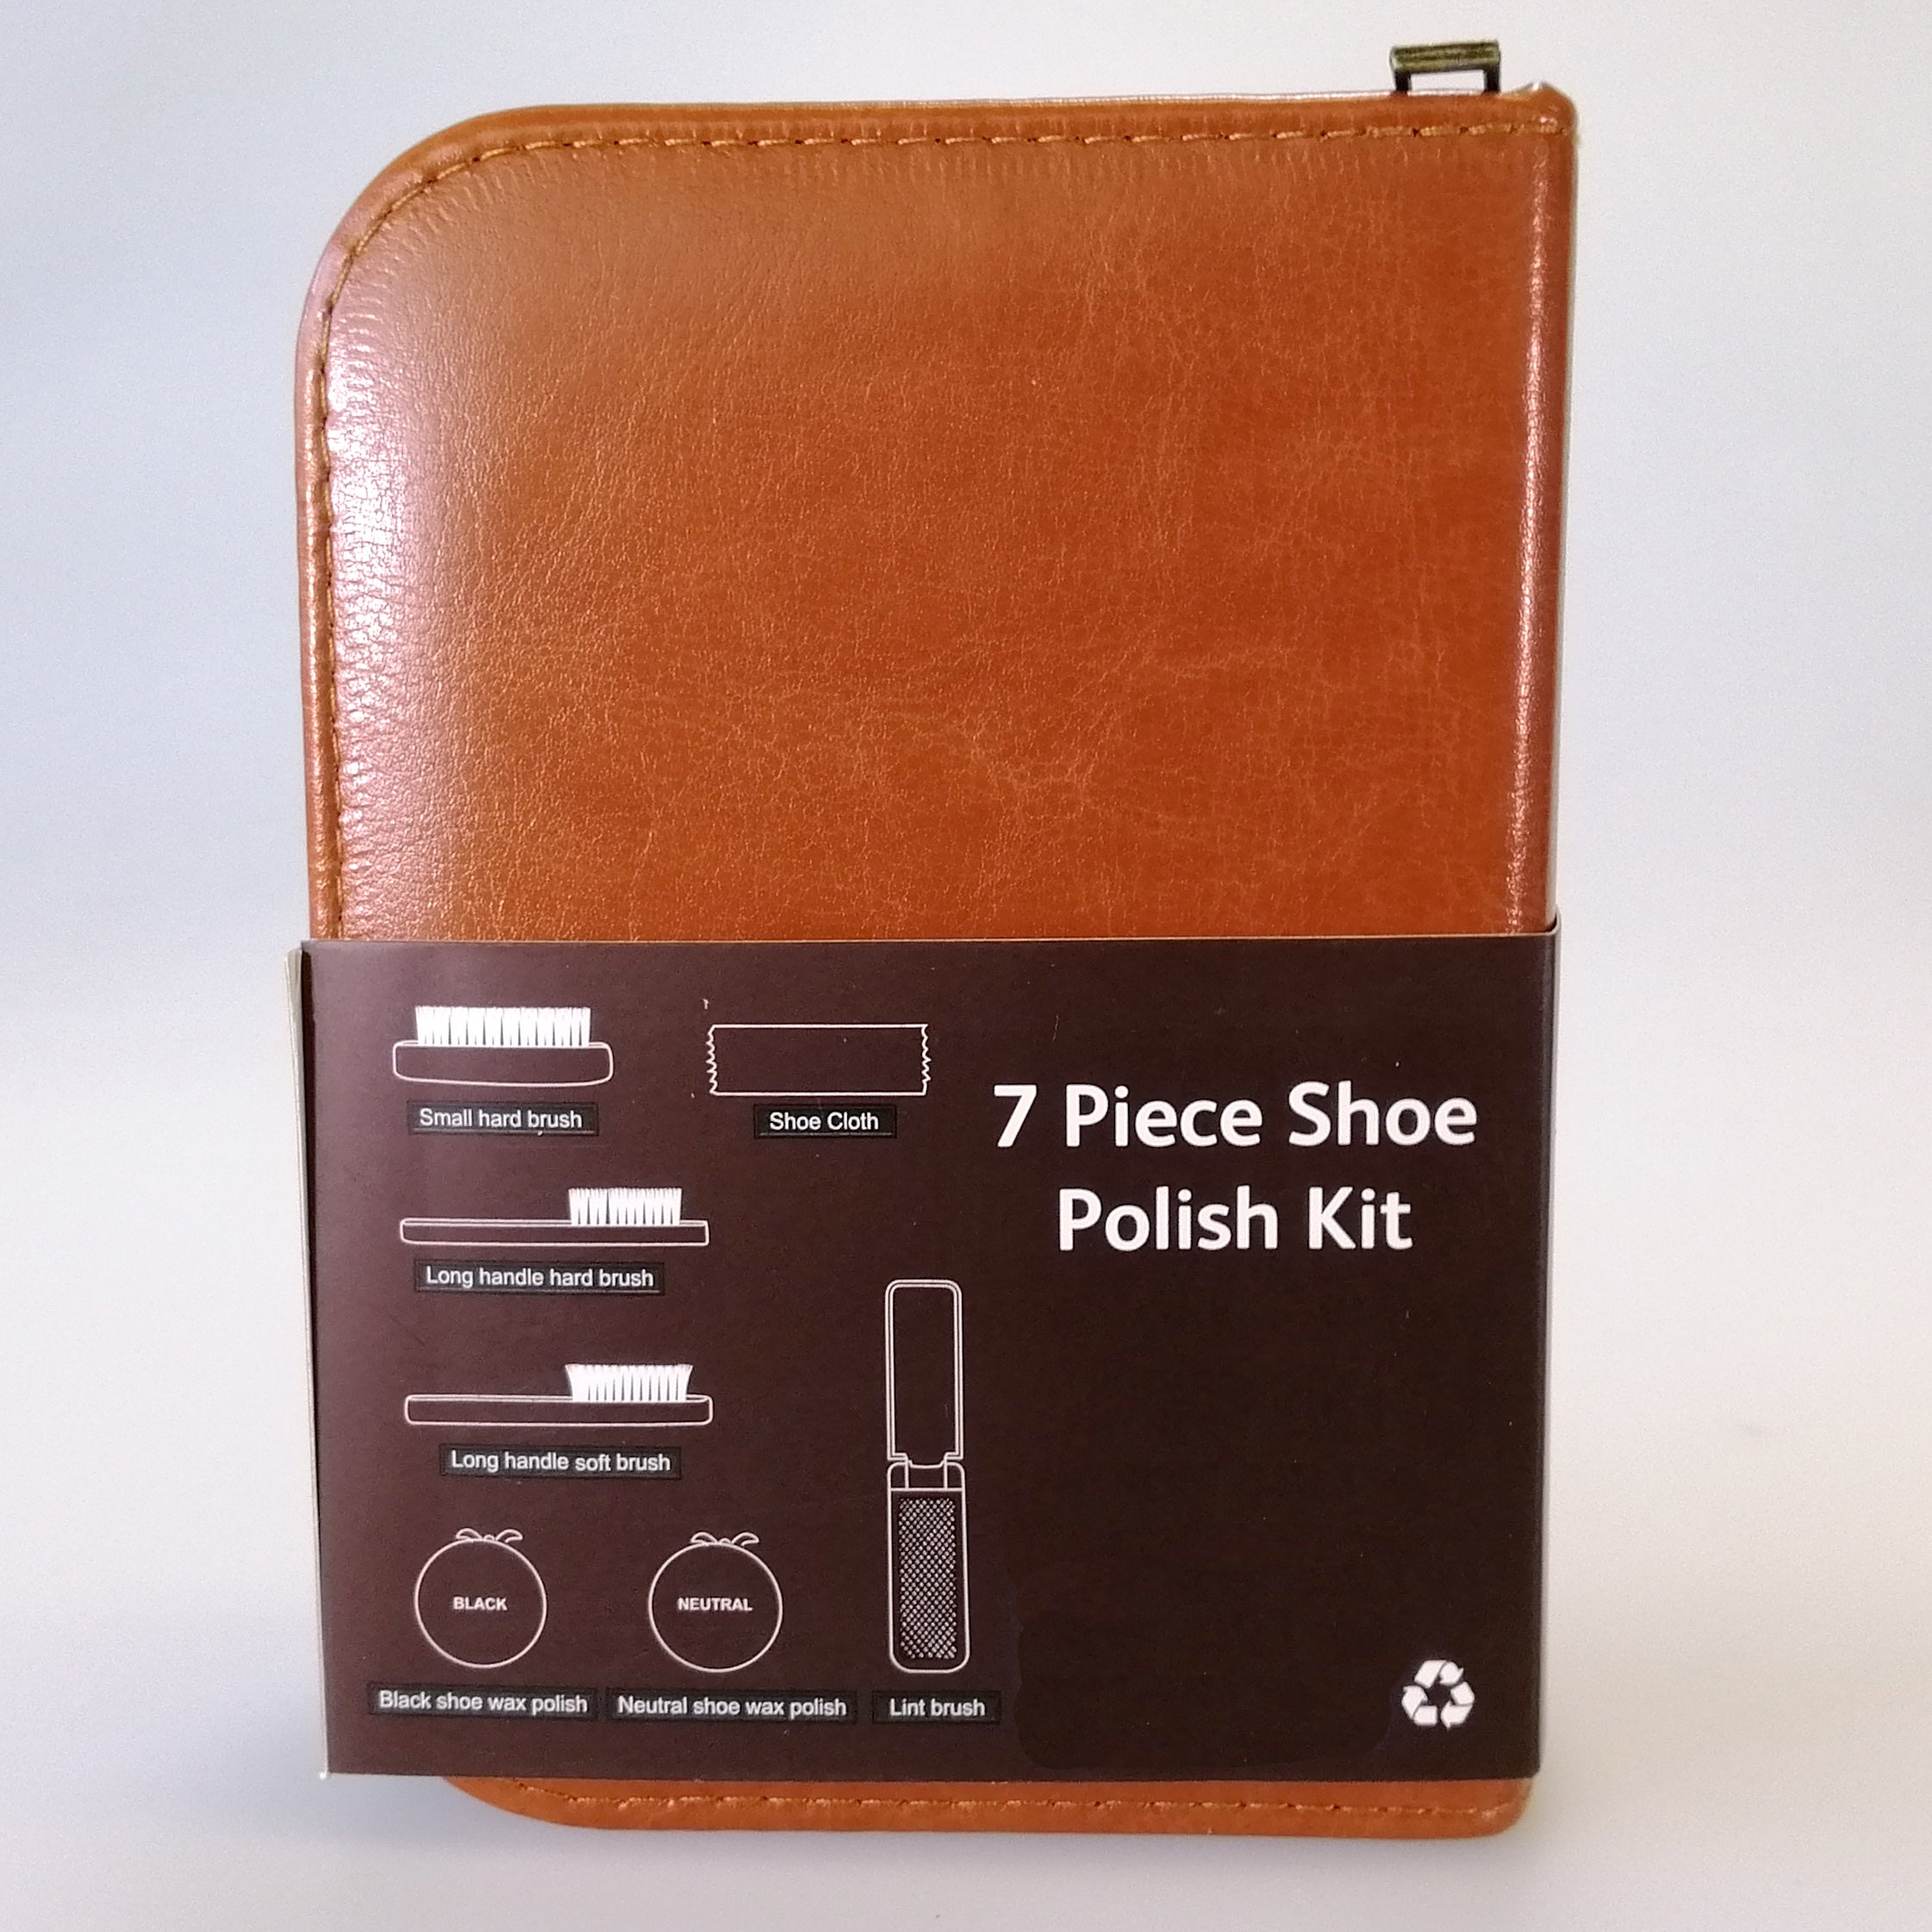 Men's Republic - Shoe Polish Kit - 7 Piece